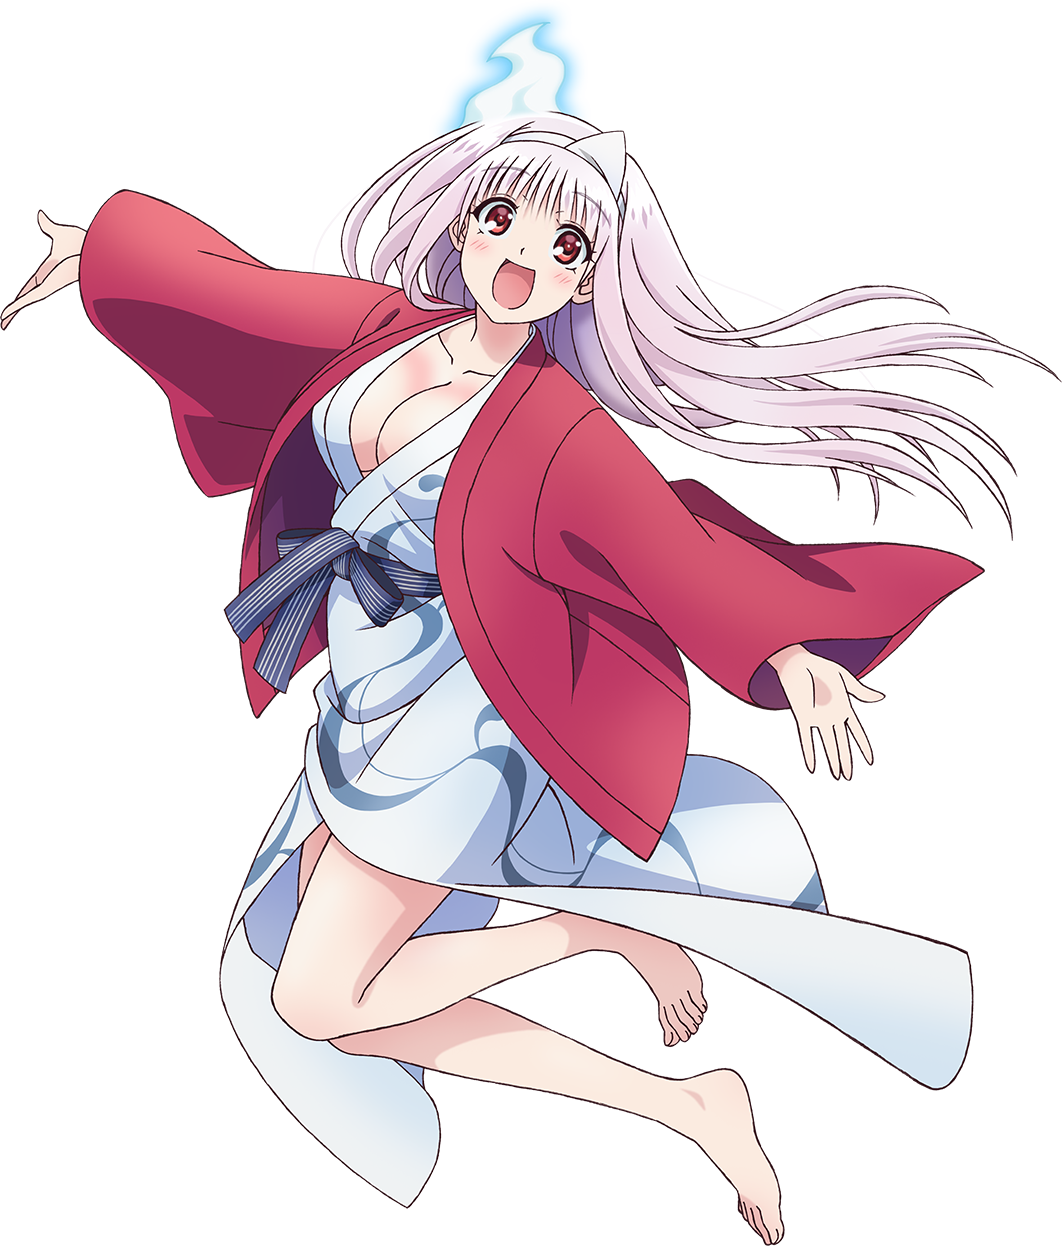 File:Yuragi-sou no Yuuna-san 3 9.png - Anime Bath Scene Wiki